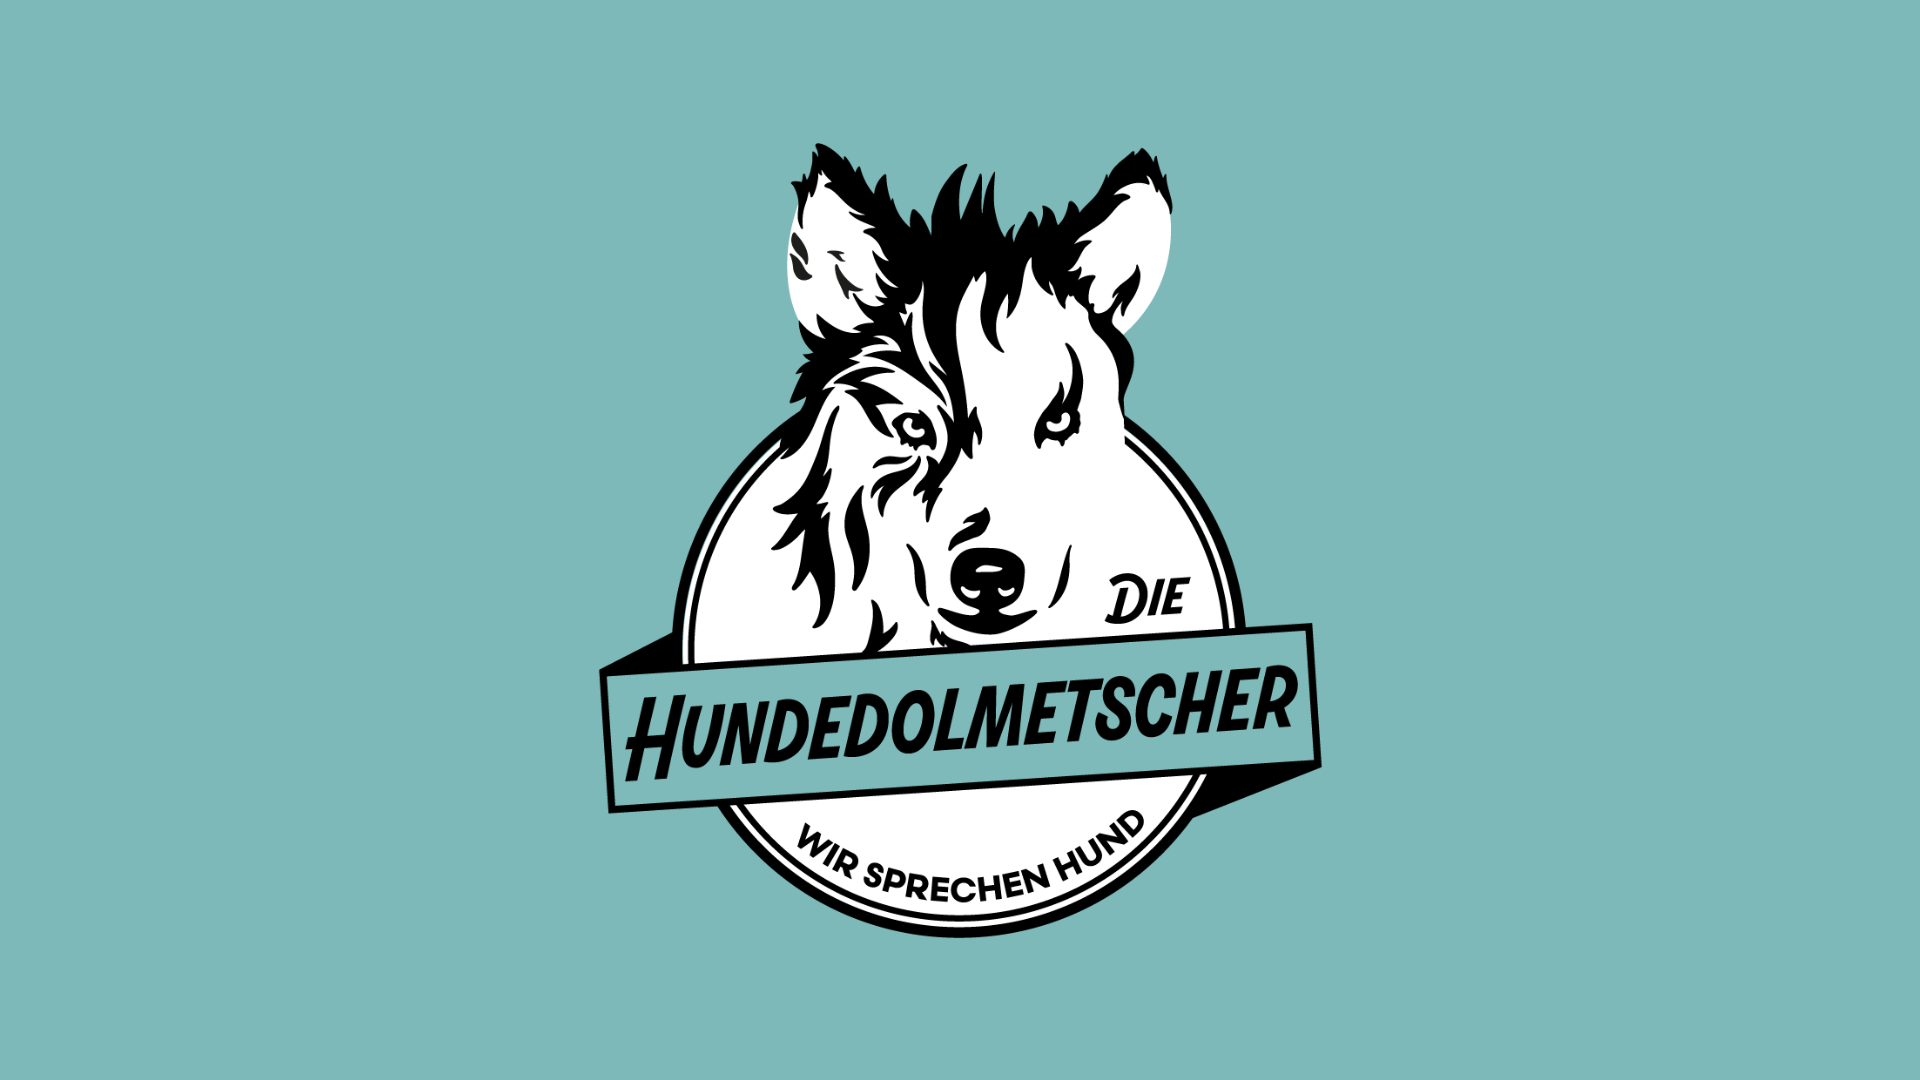 (c) Hundedolmetscher.com